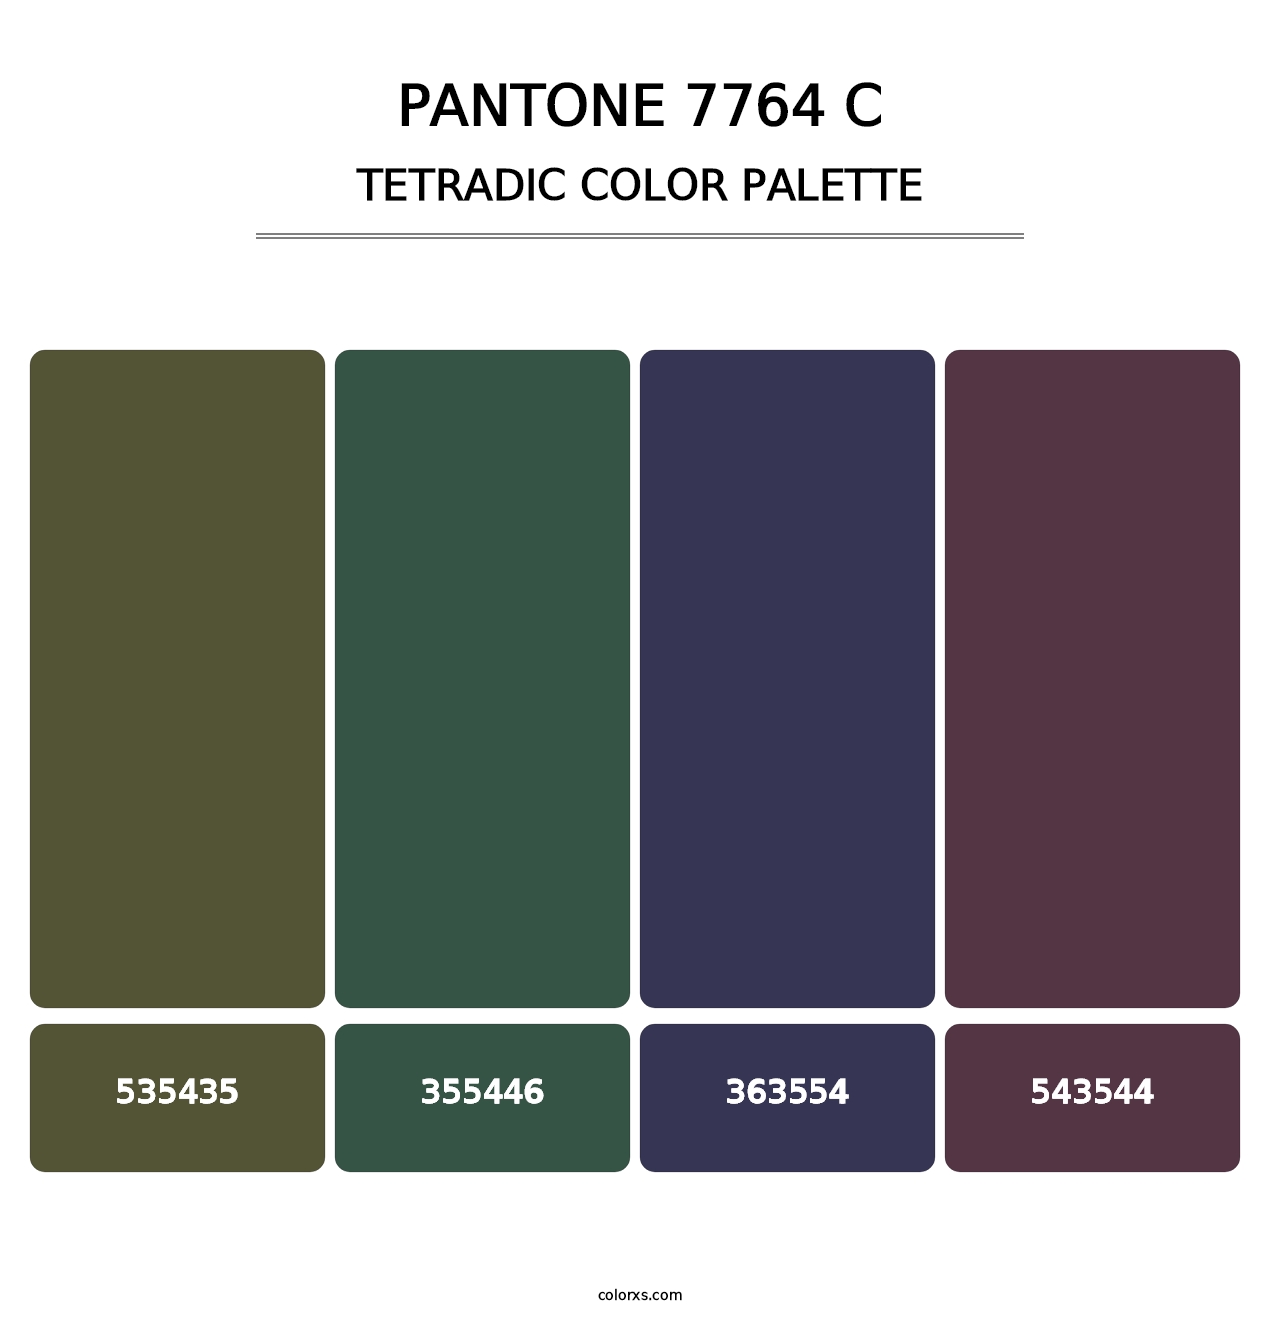 PANTONE 7764 C - Tetradic Color Palette